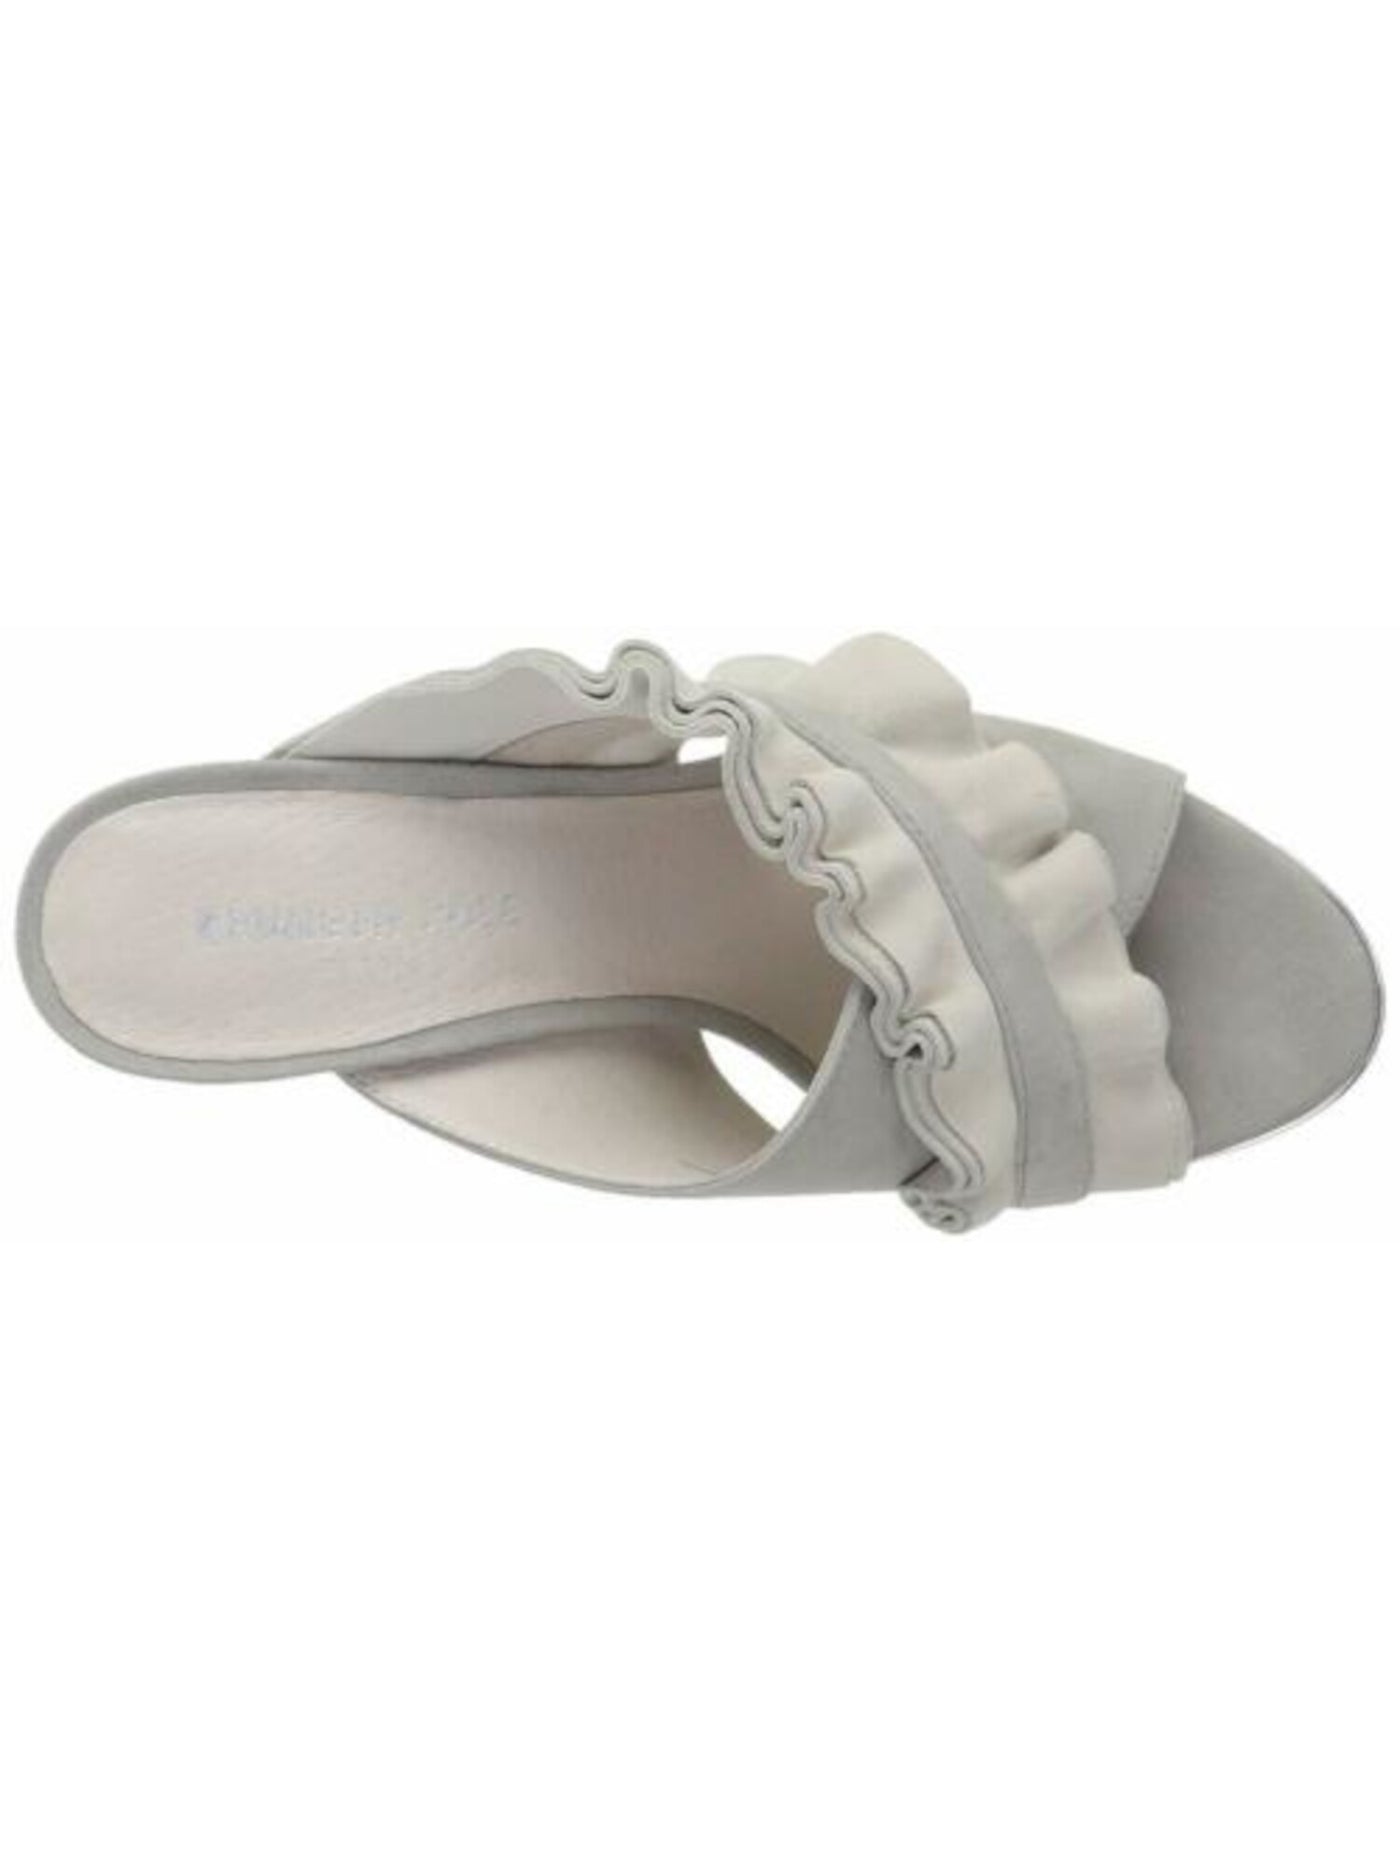 KENNETH COLE NEW YORK Womens Gray Ruffled Padded Laken Round Toe Block Heel Slip On Leather Slide Sandals Shoes 9.5 M